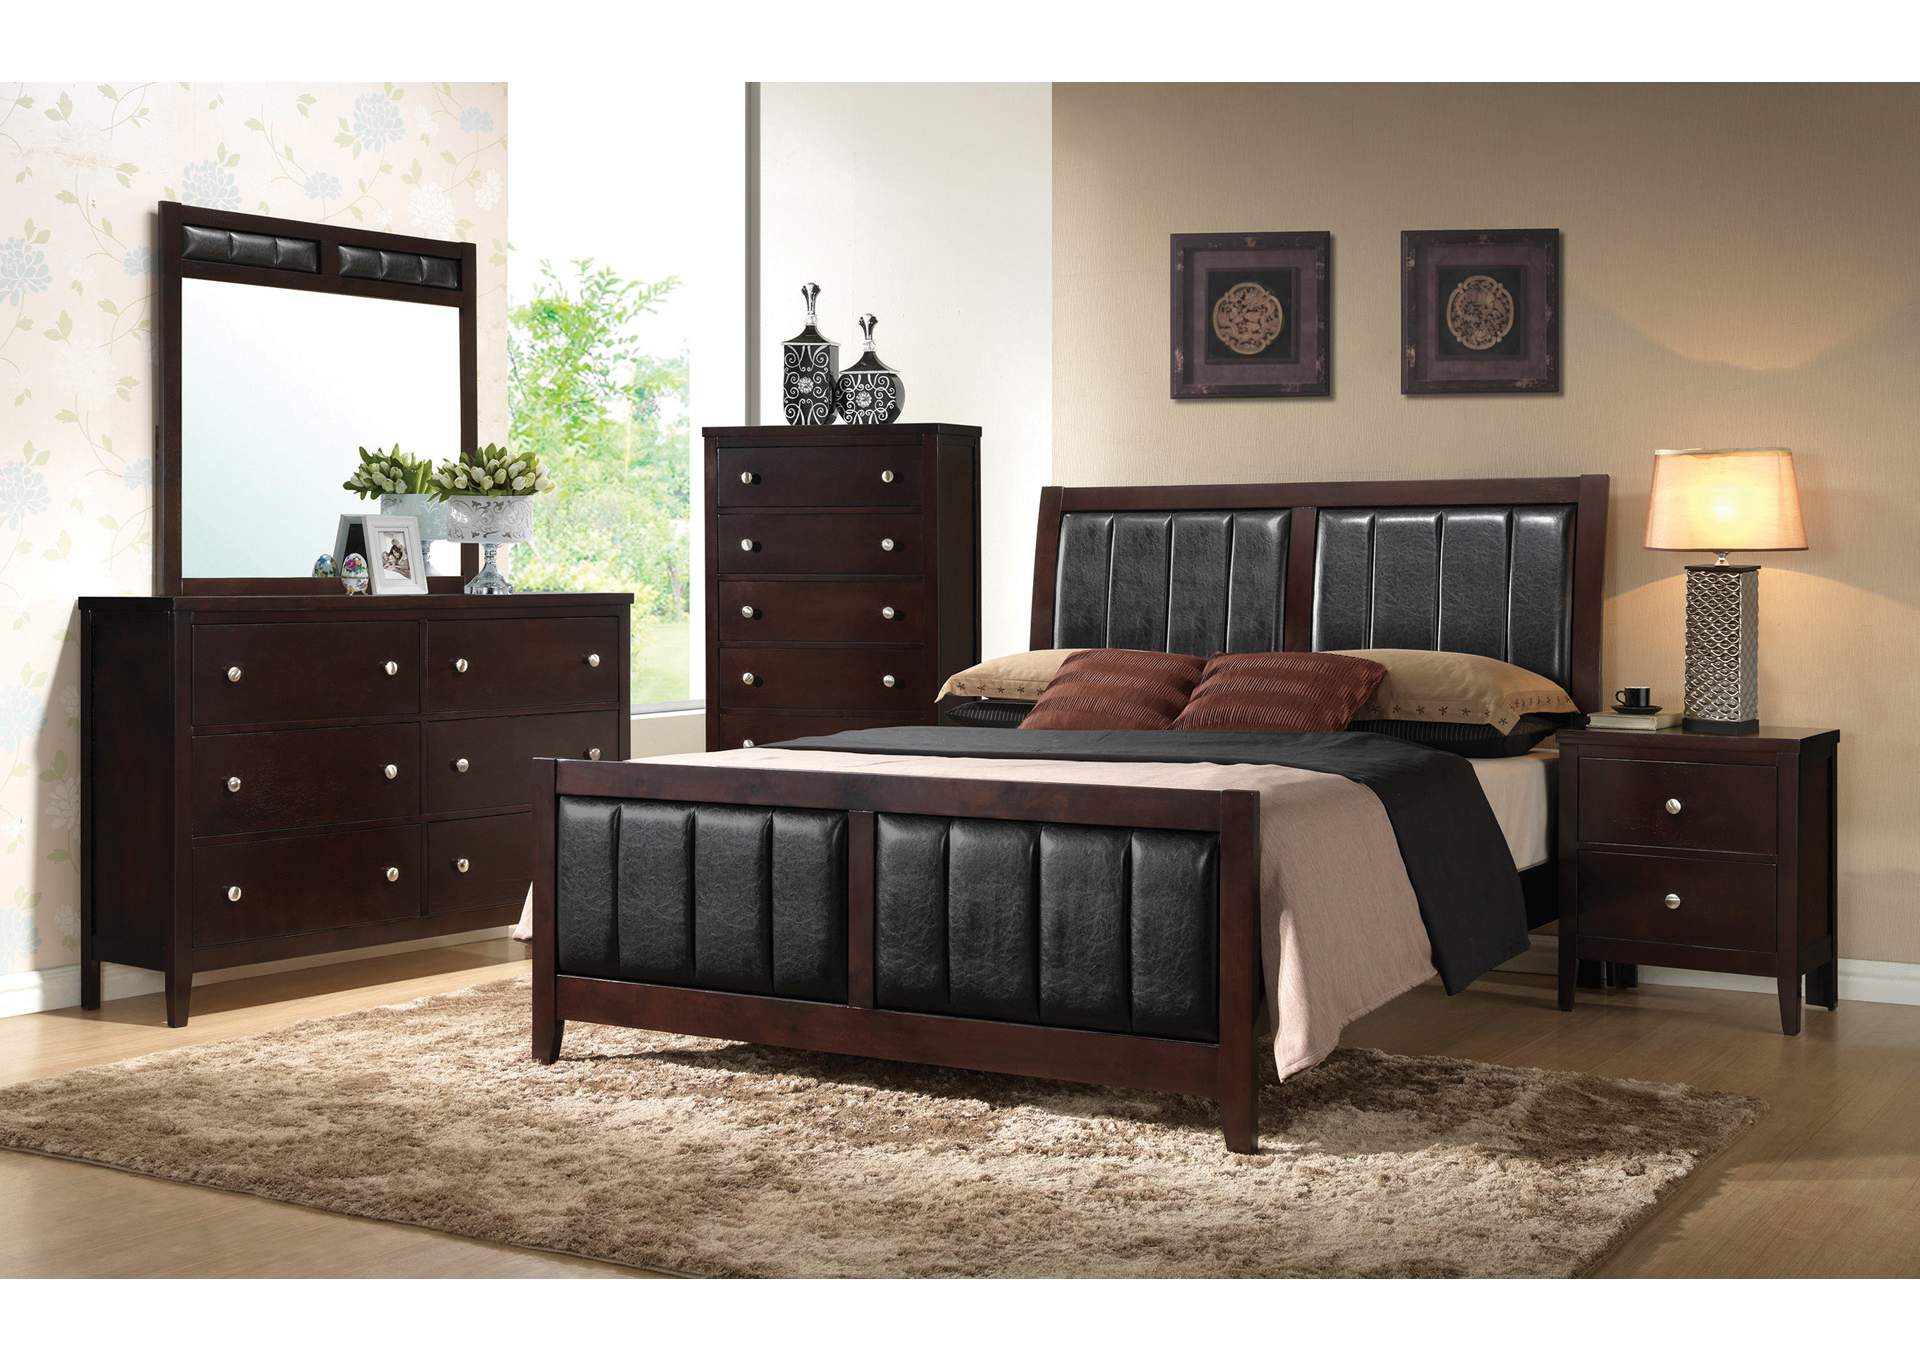 4 piece bedroom furniture set